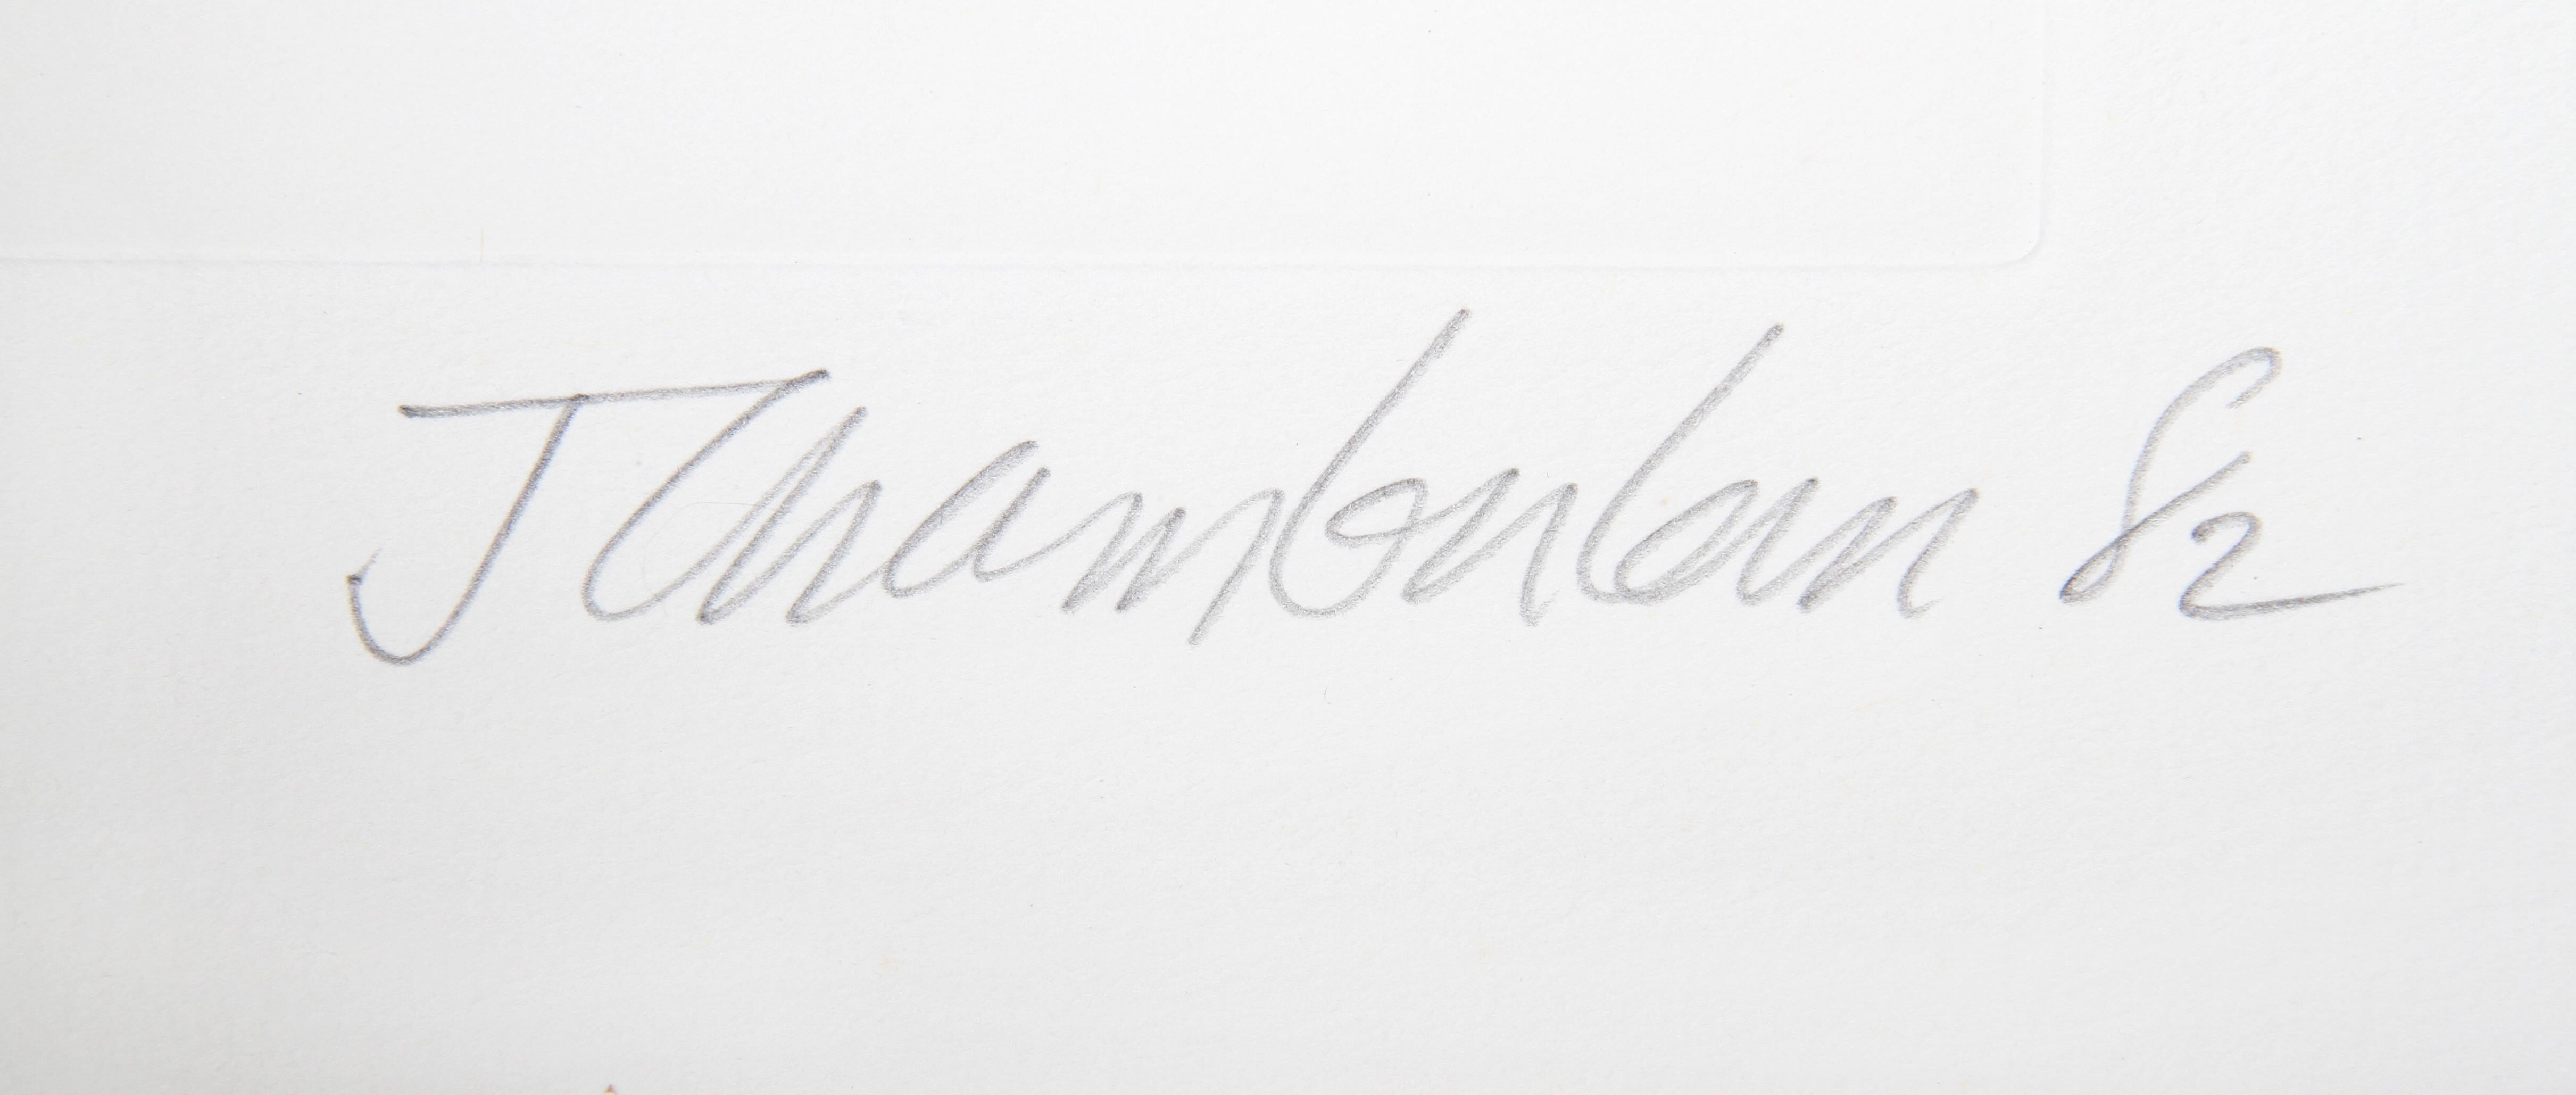 VI (Signaturen) aus dem Zehn Kokosnussholz-Portfolio – Print von John Chamberlain